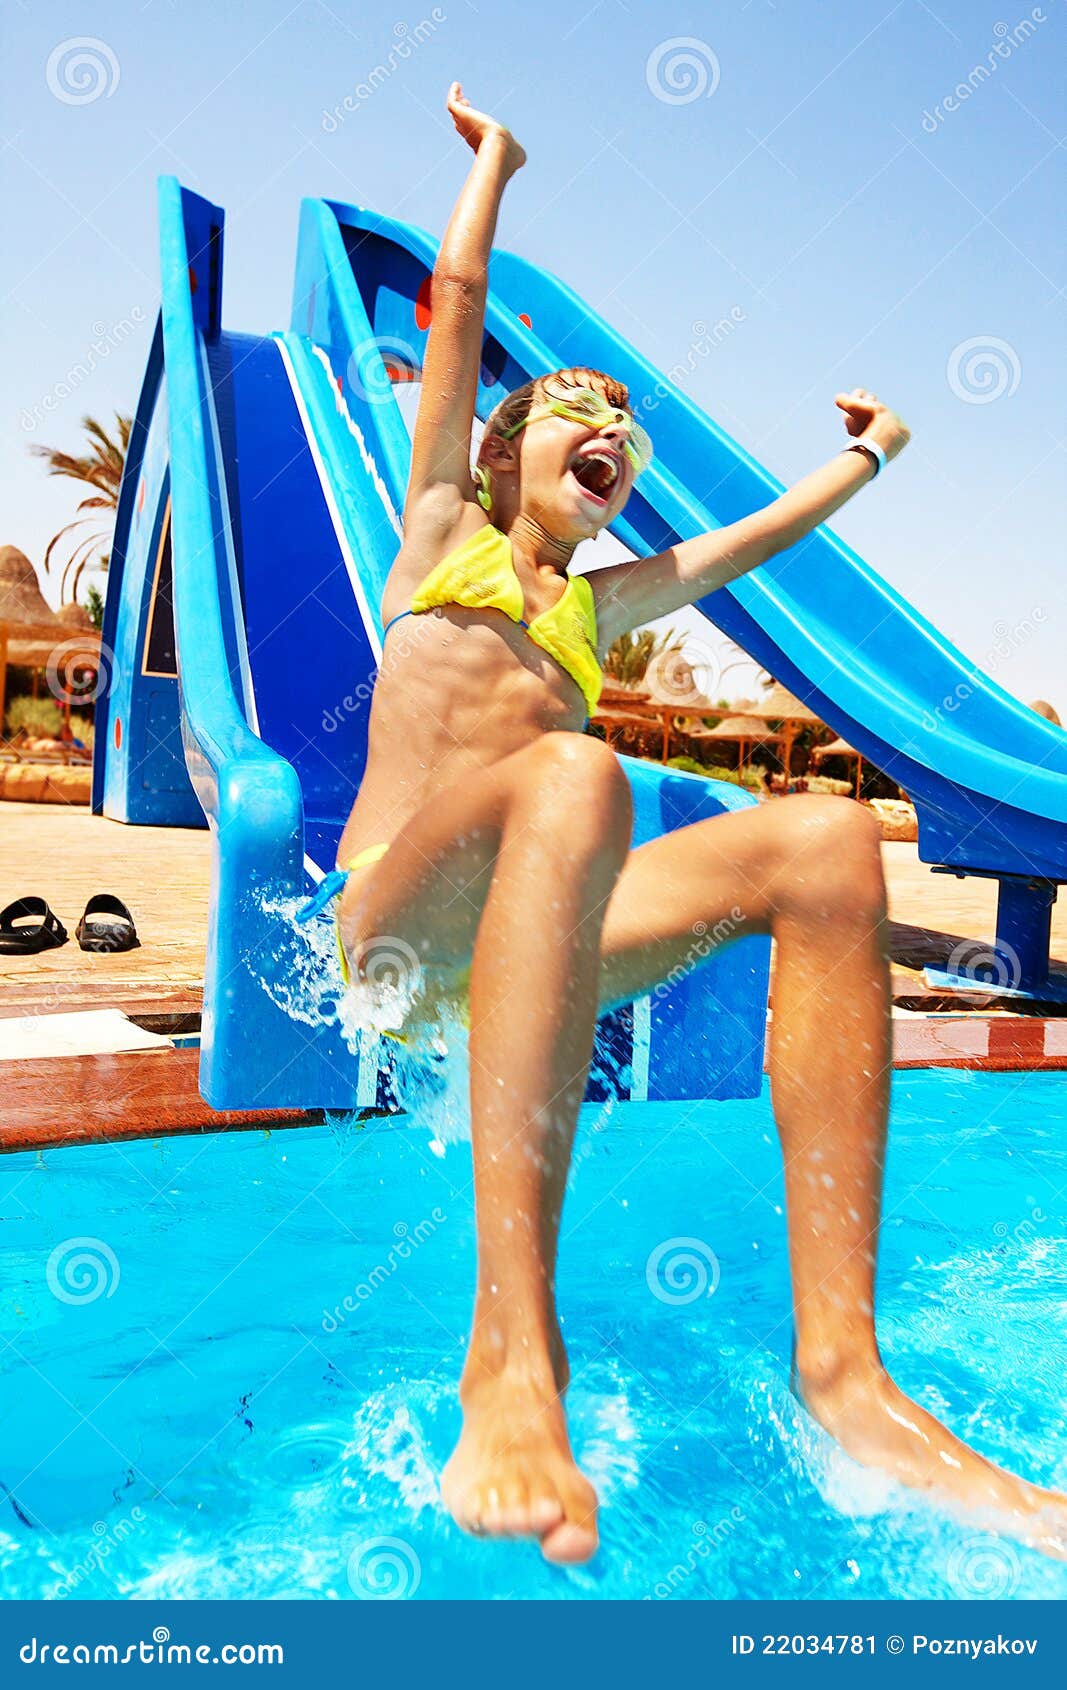 david iparraguirre recommends Water Slide Bikini Malfunctions